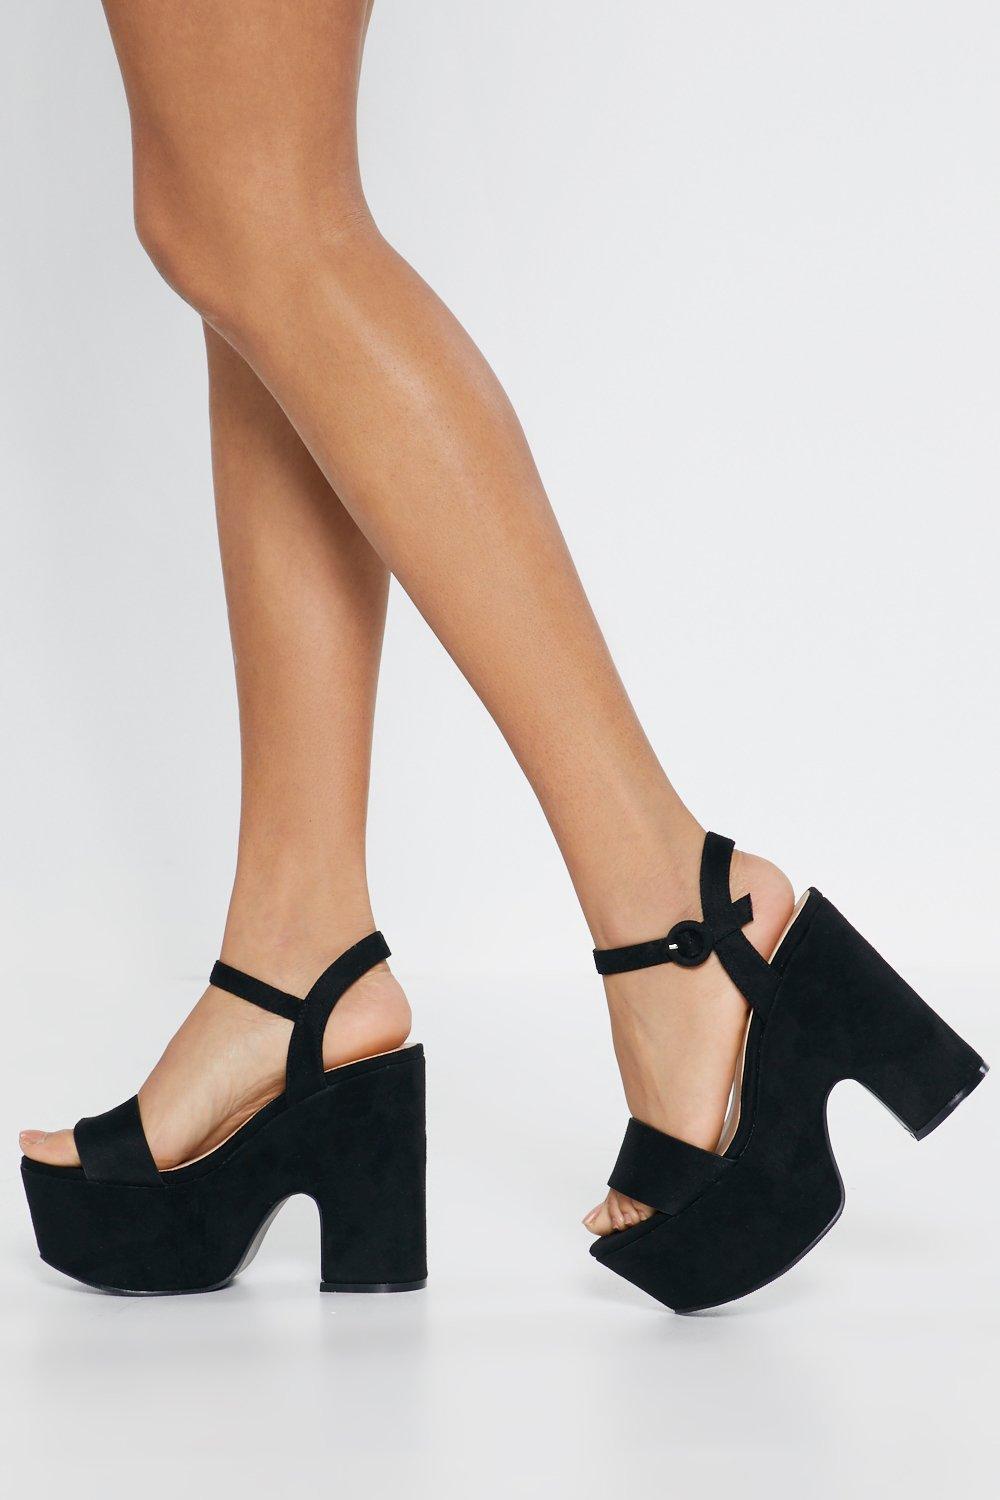 tan platform block heels